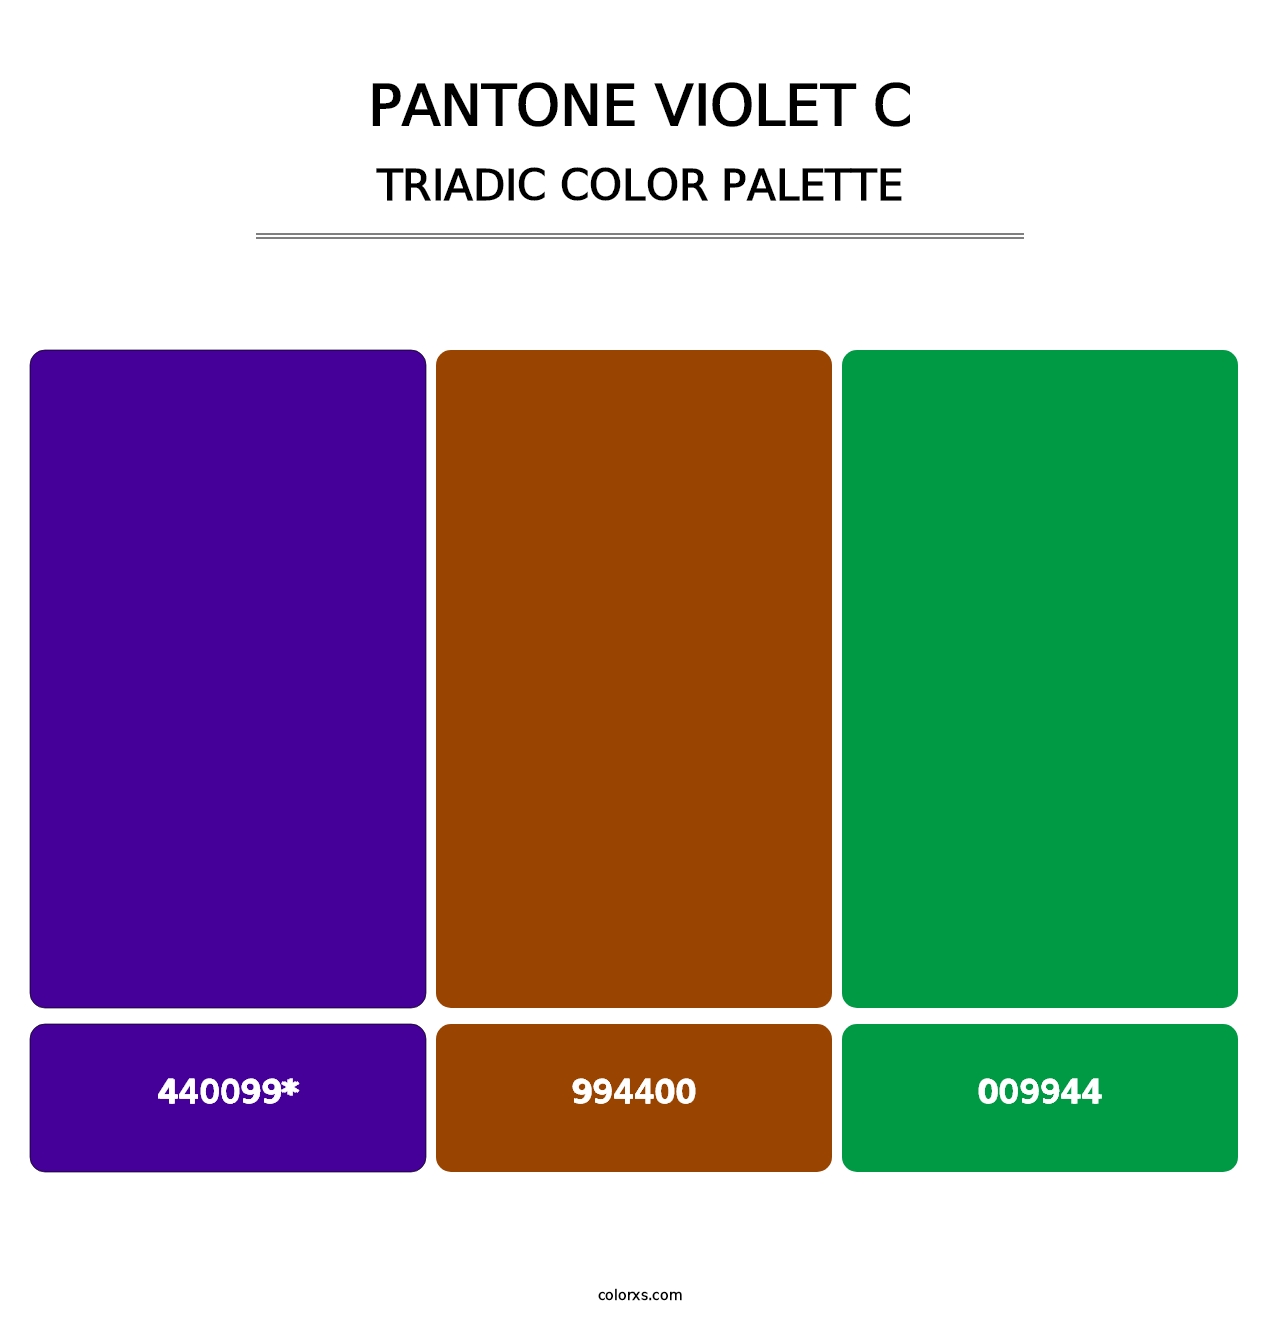 PANTONE Violet C - Triadic Color Palette